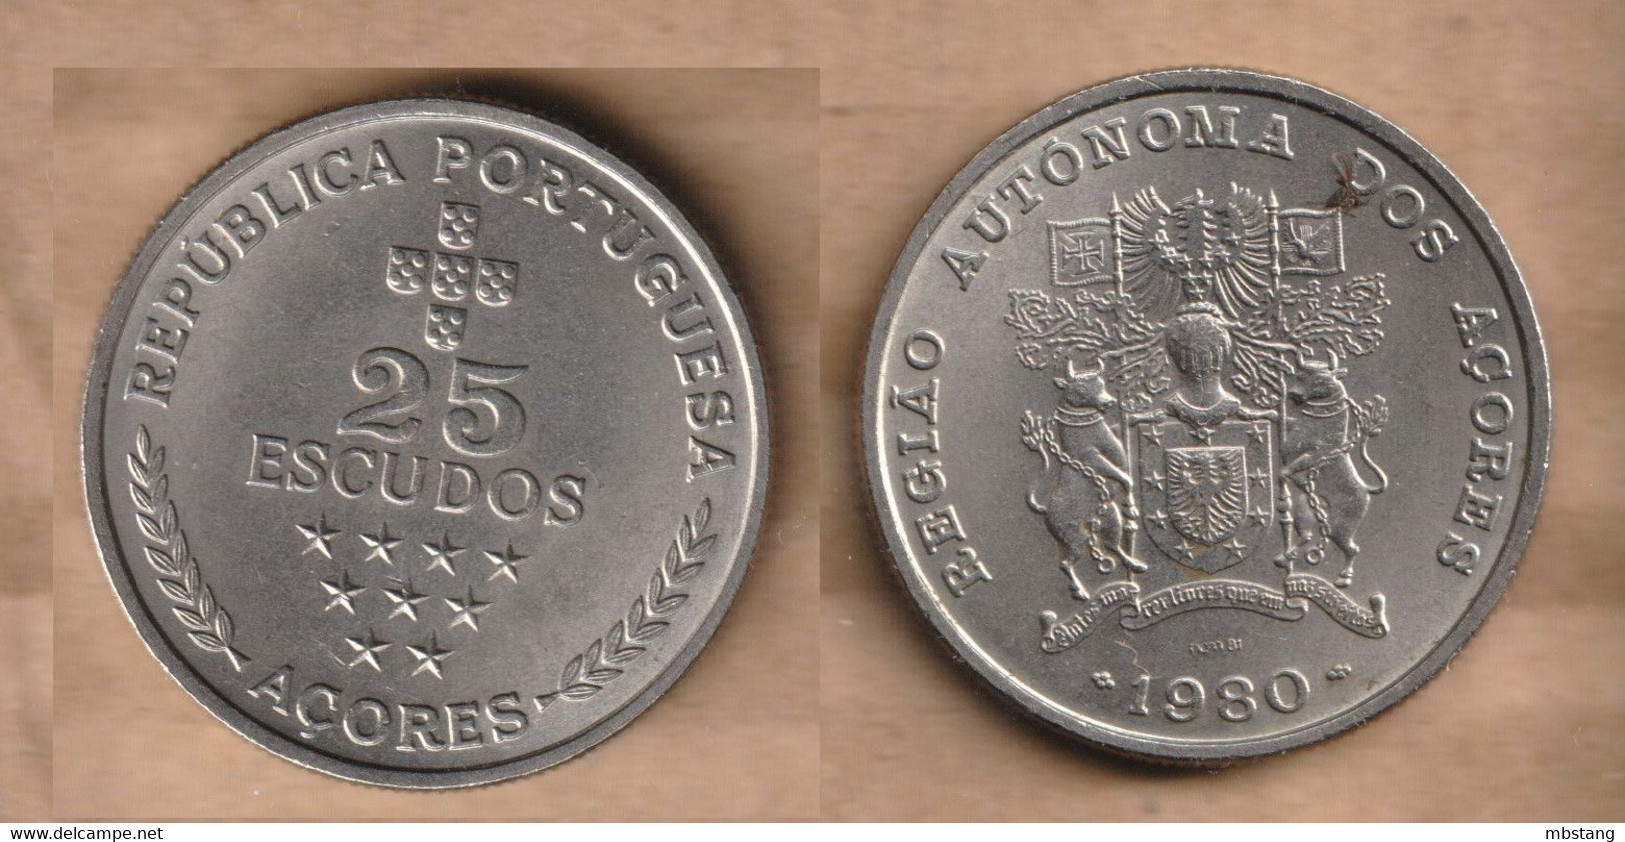 Azores 25 Escudos (Azores Regional Autonomy) 1980 Copper-nickel • 11.05 G • ⌀ 28.5 Mm Schön# 3 - Azores